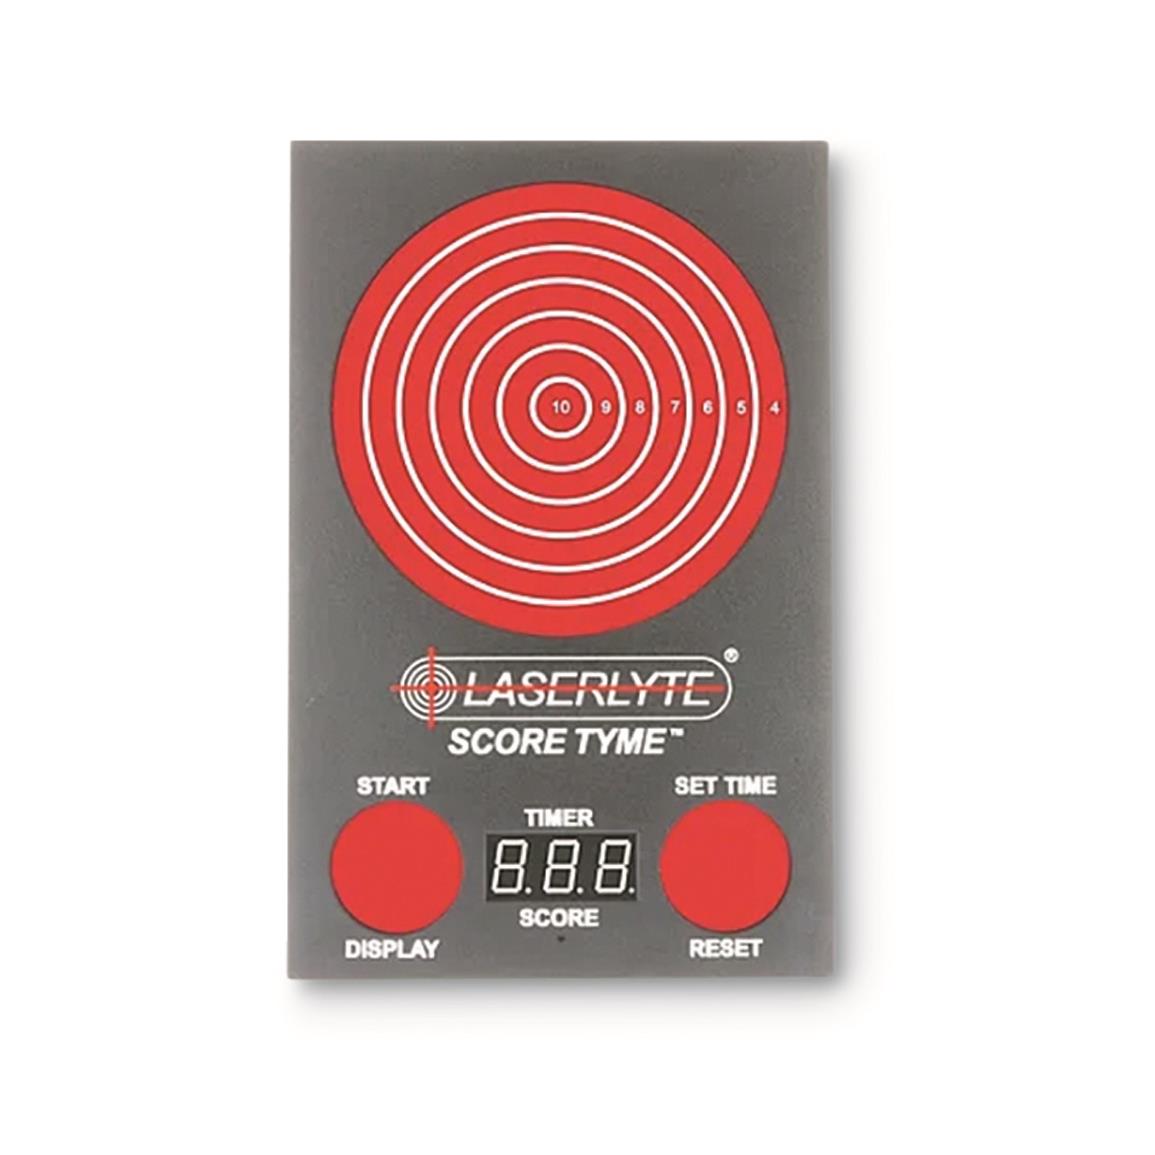 LaserLyte Score Tyme Trainer Target